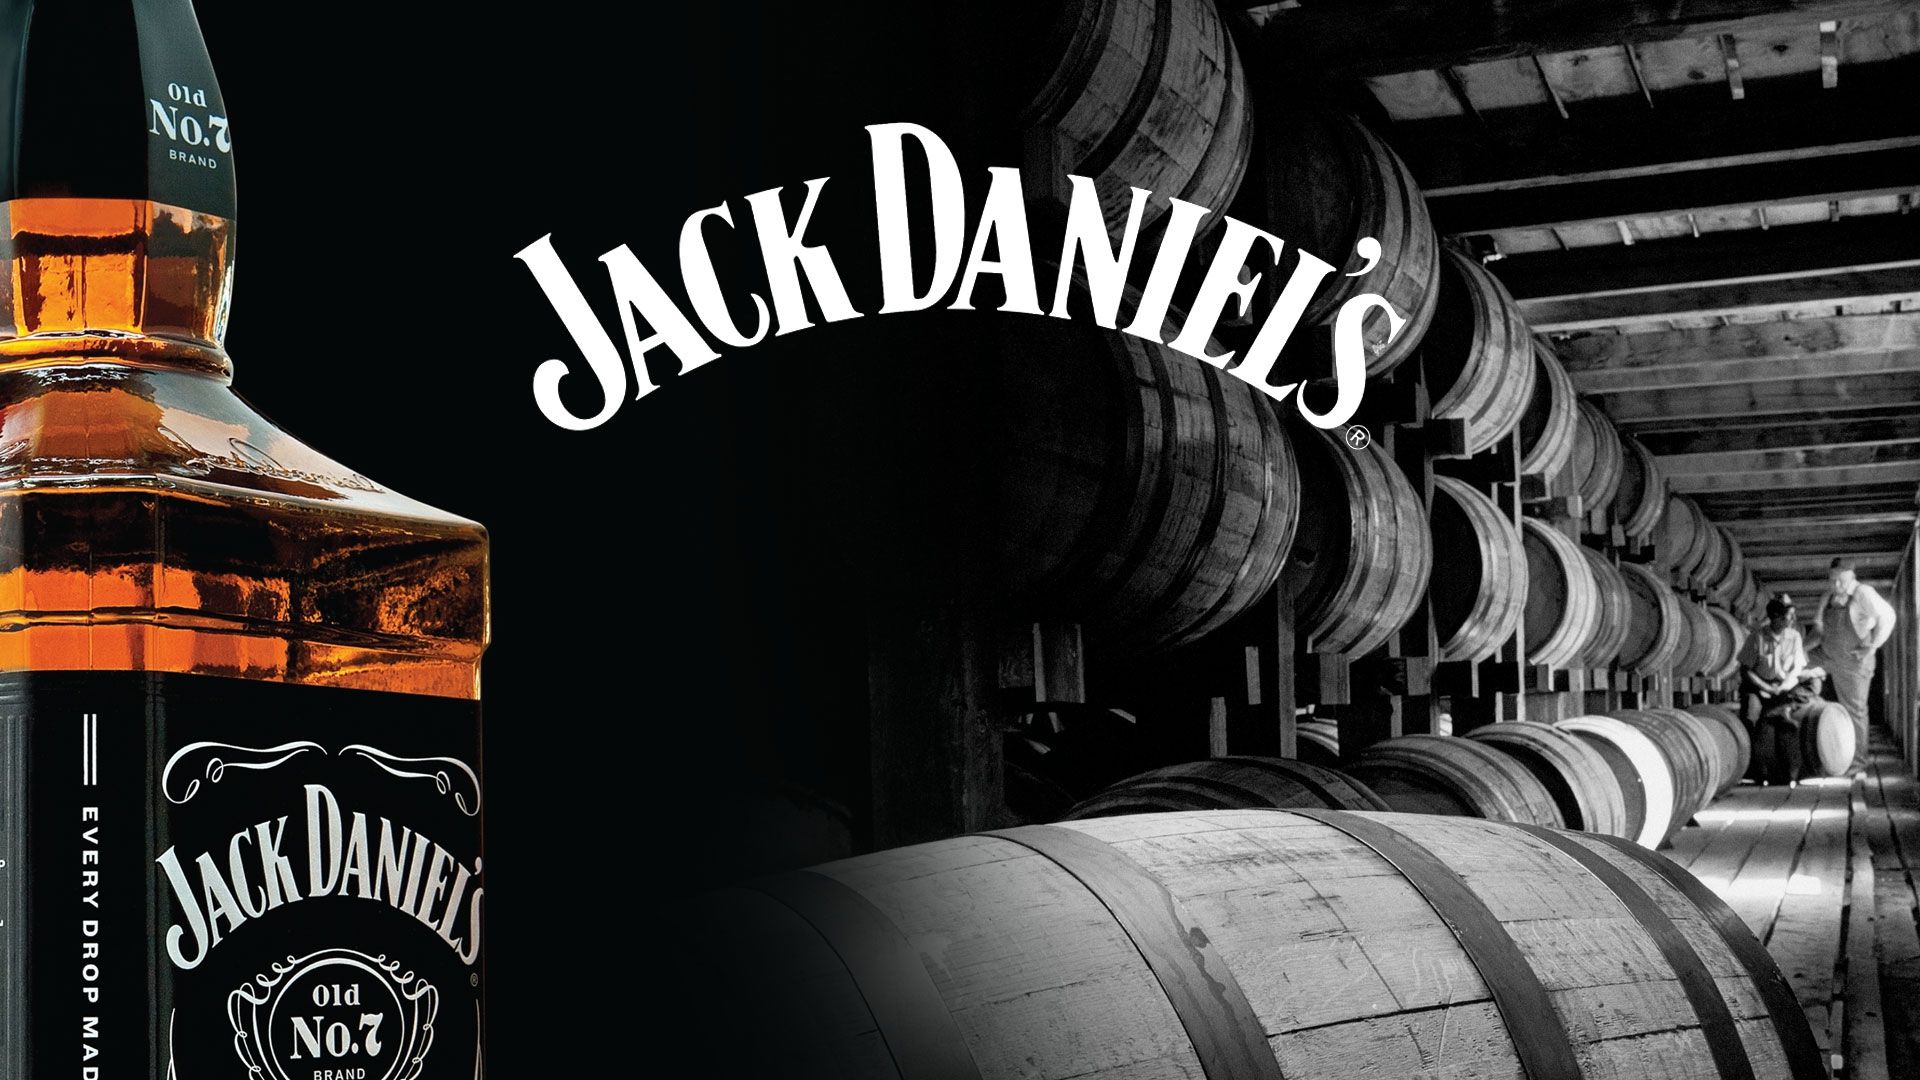 Jack Daniels Wallpaper Image Photo Picture Background